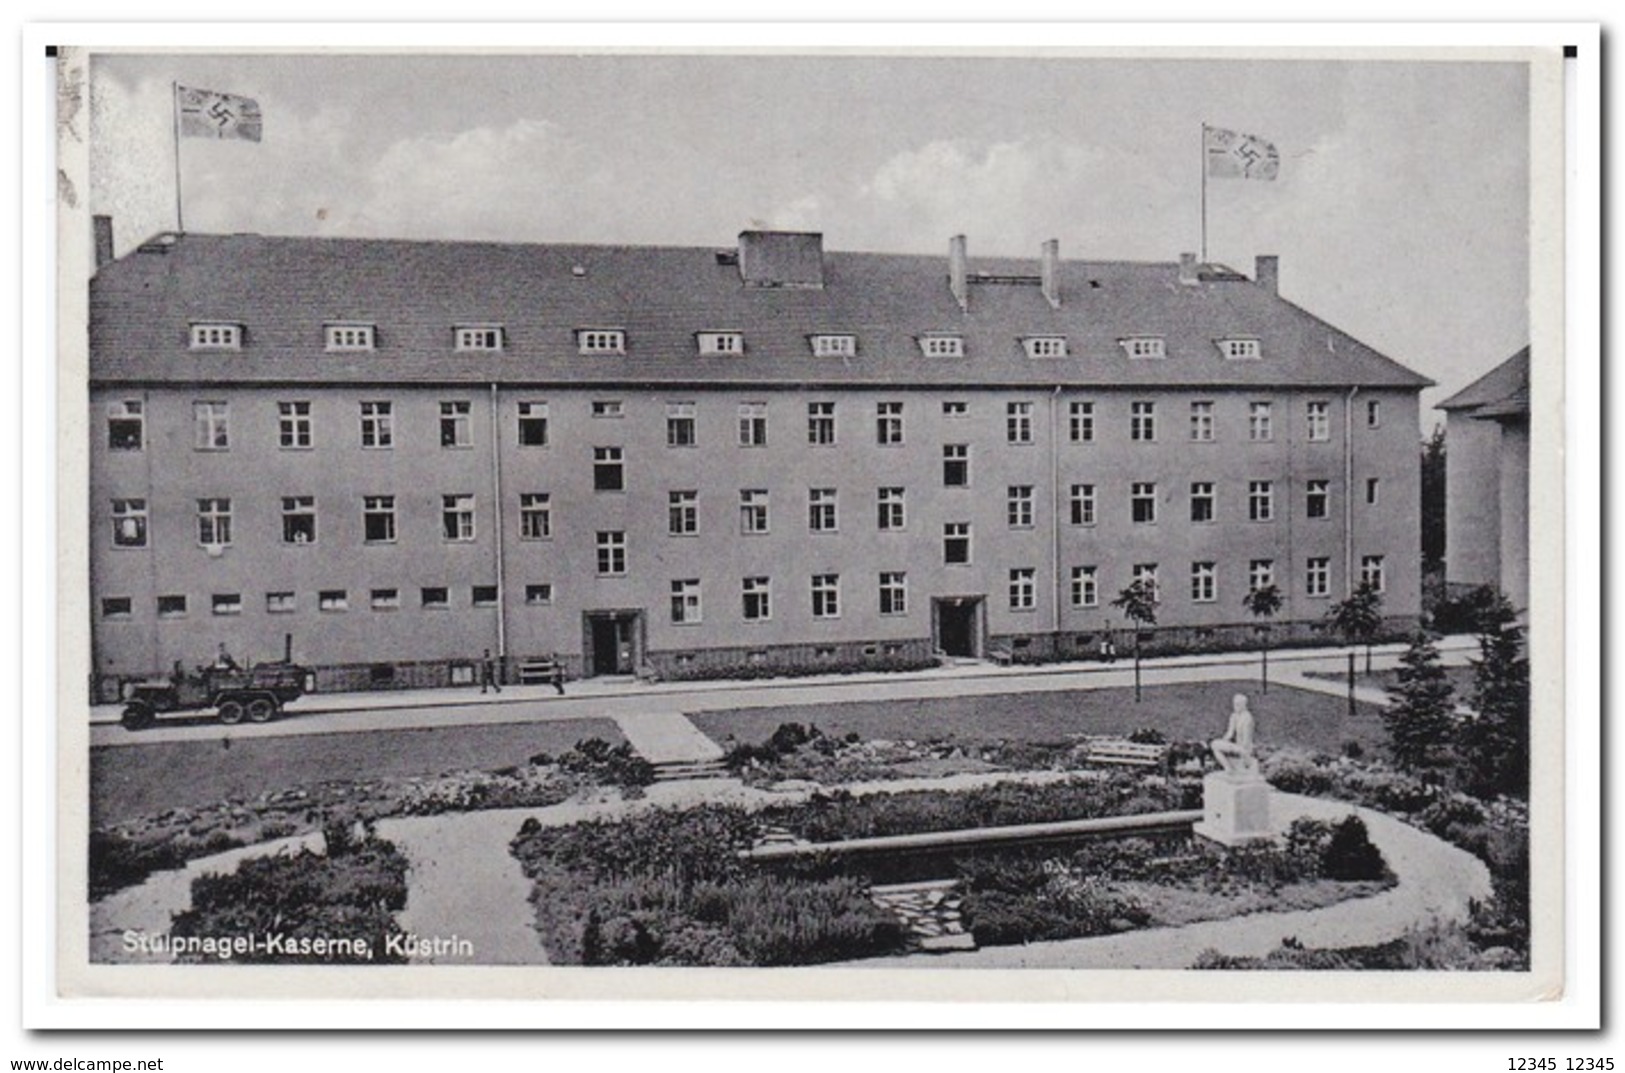 Stülpnagel-Kaserne, Küstrin - Neumark